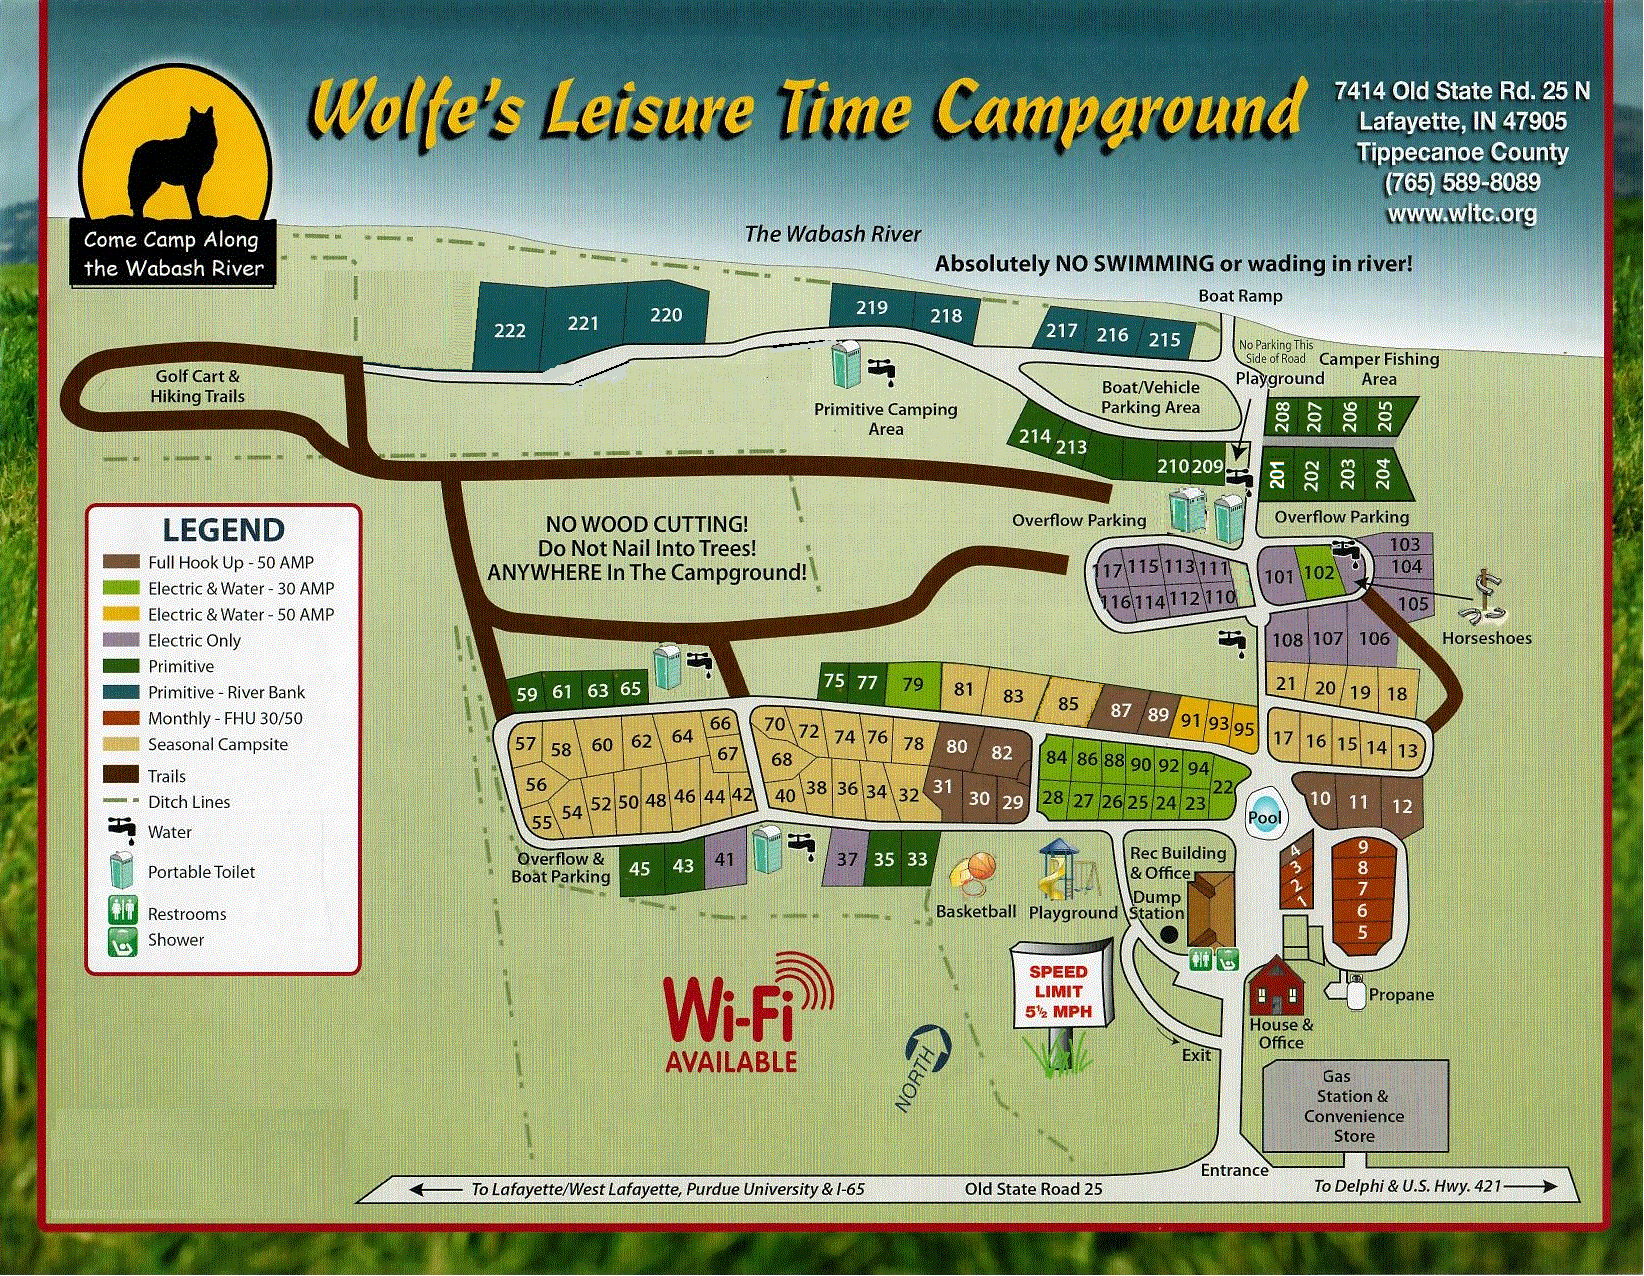 WLTC Camp Map Image